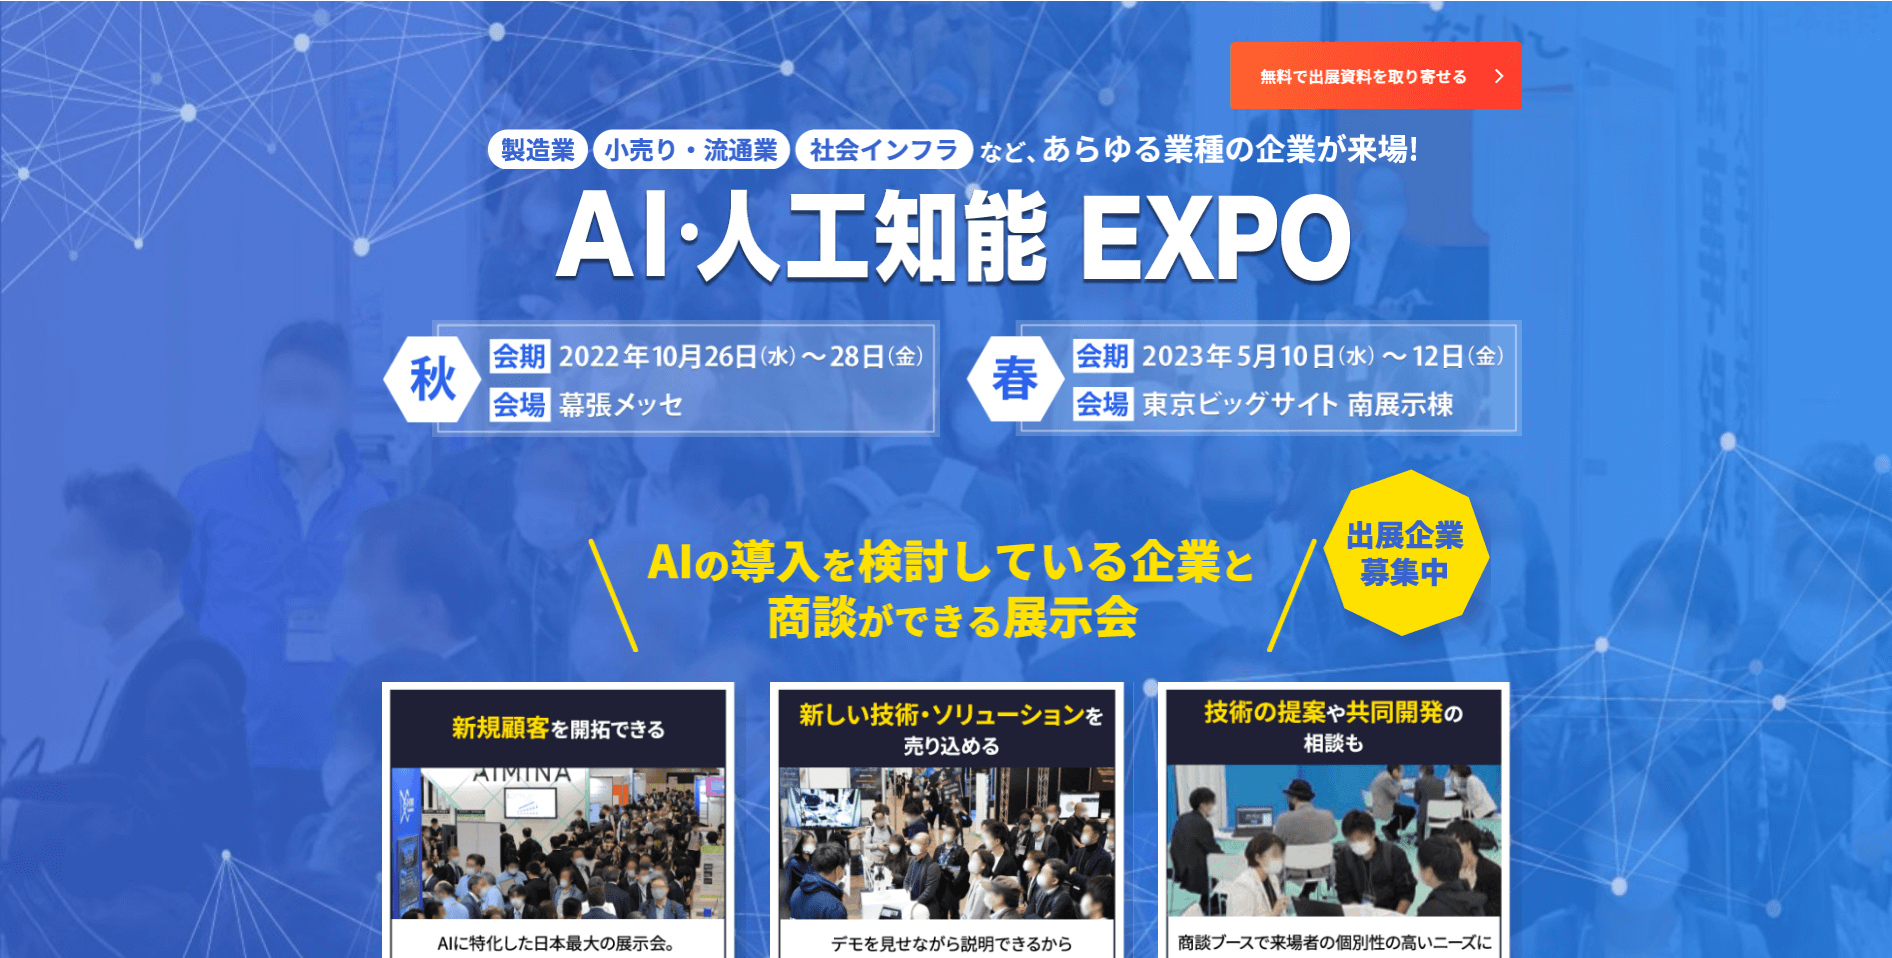 AI・人工知能EXPO